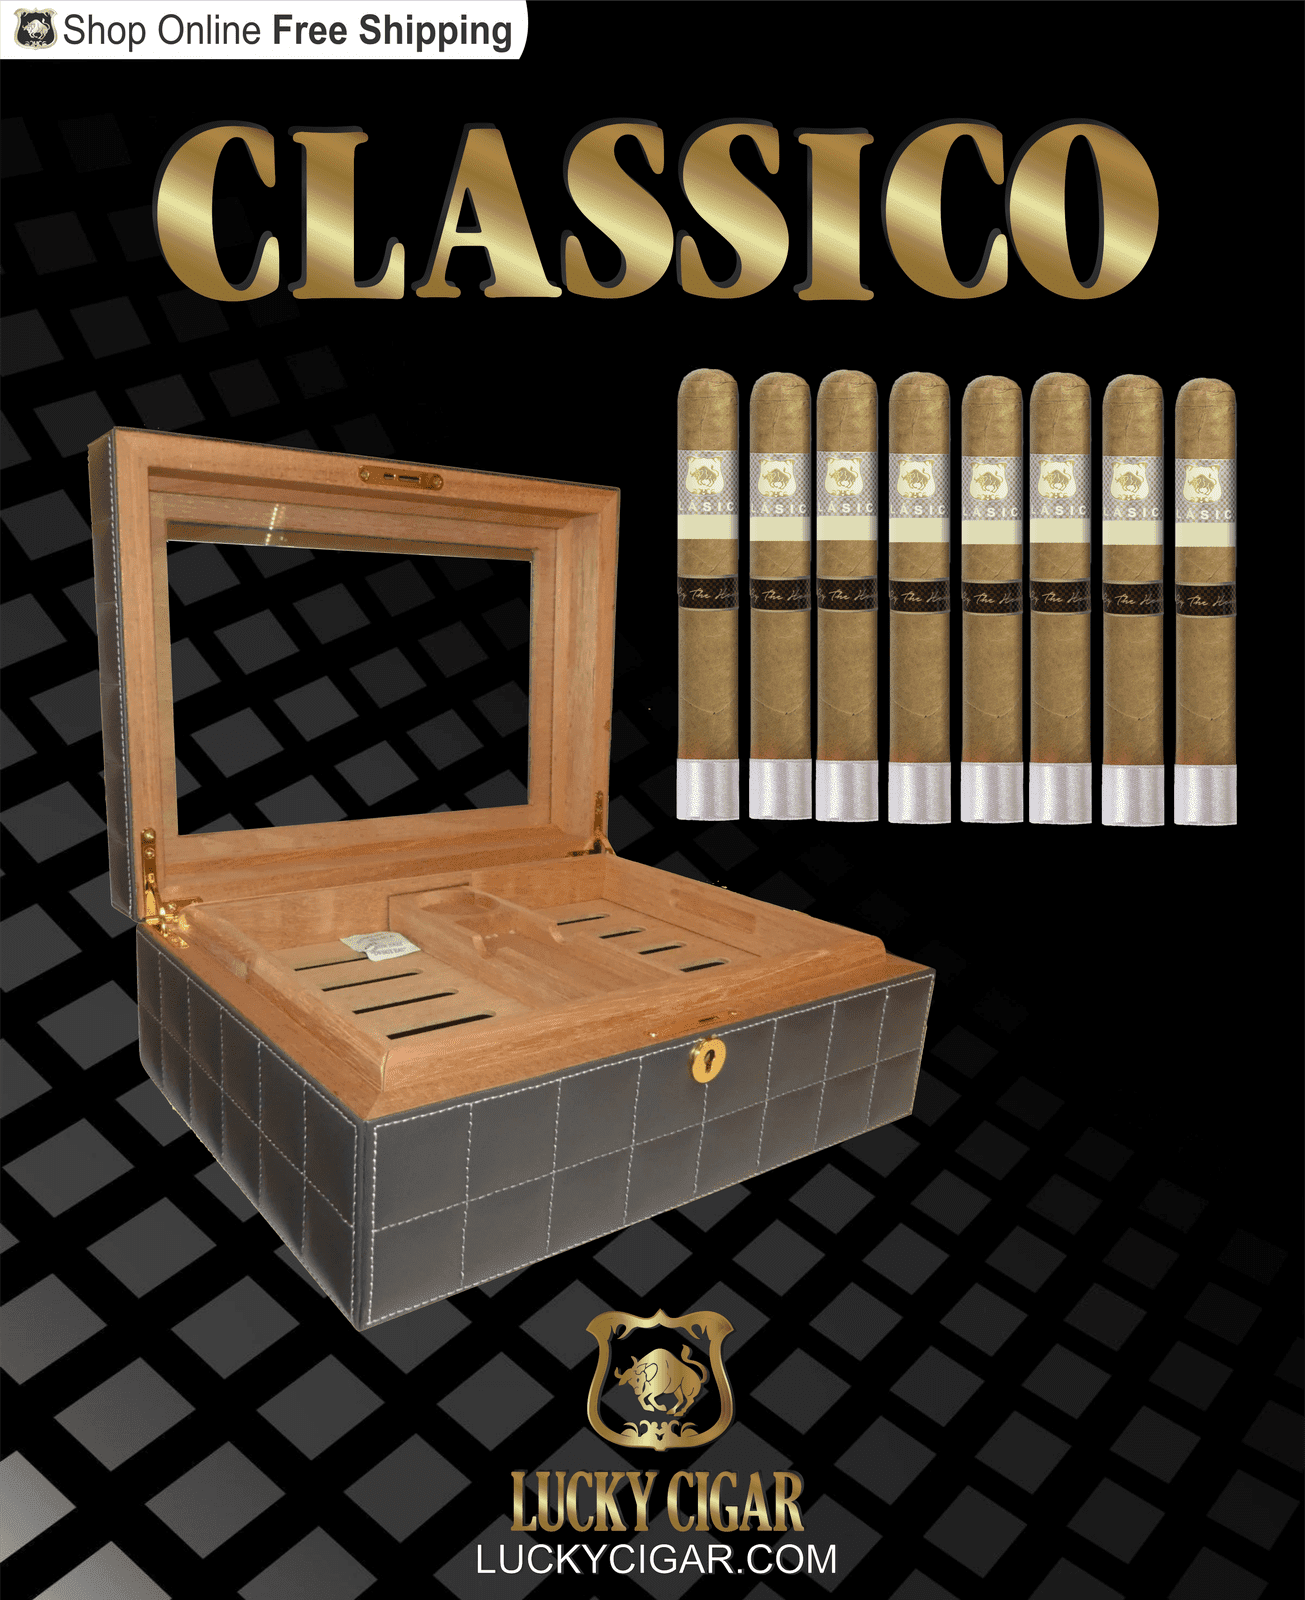 Lucky Cigar Sampler Sets: Set of 8 Classico Toro Cigars with Desk Humidor